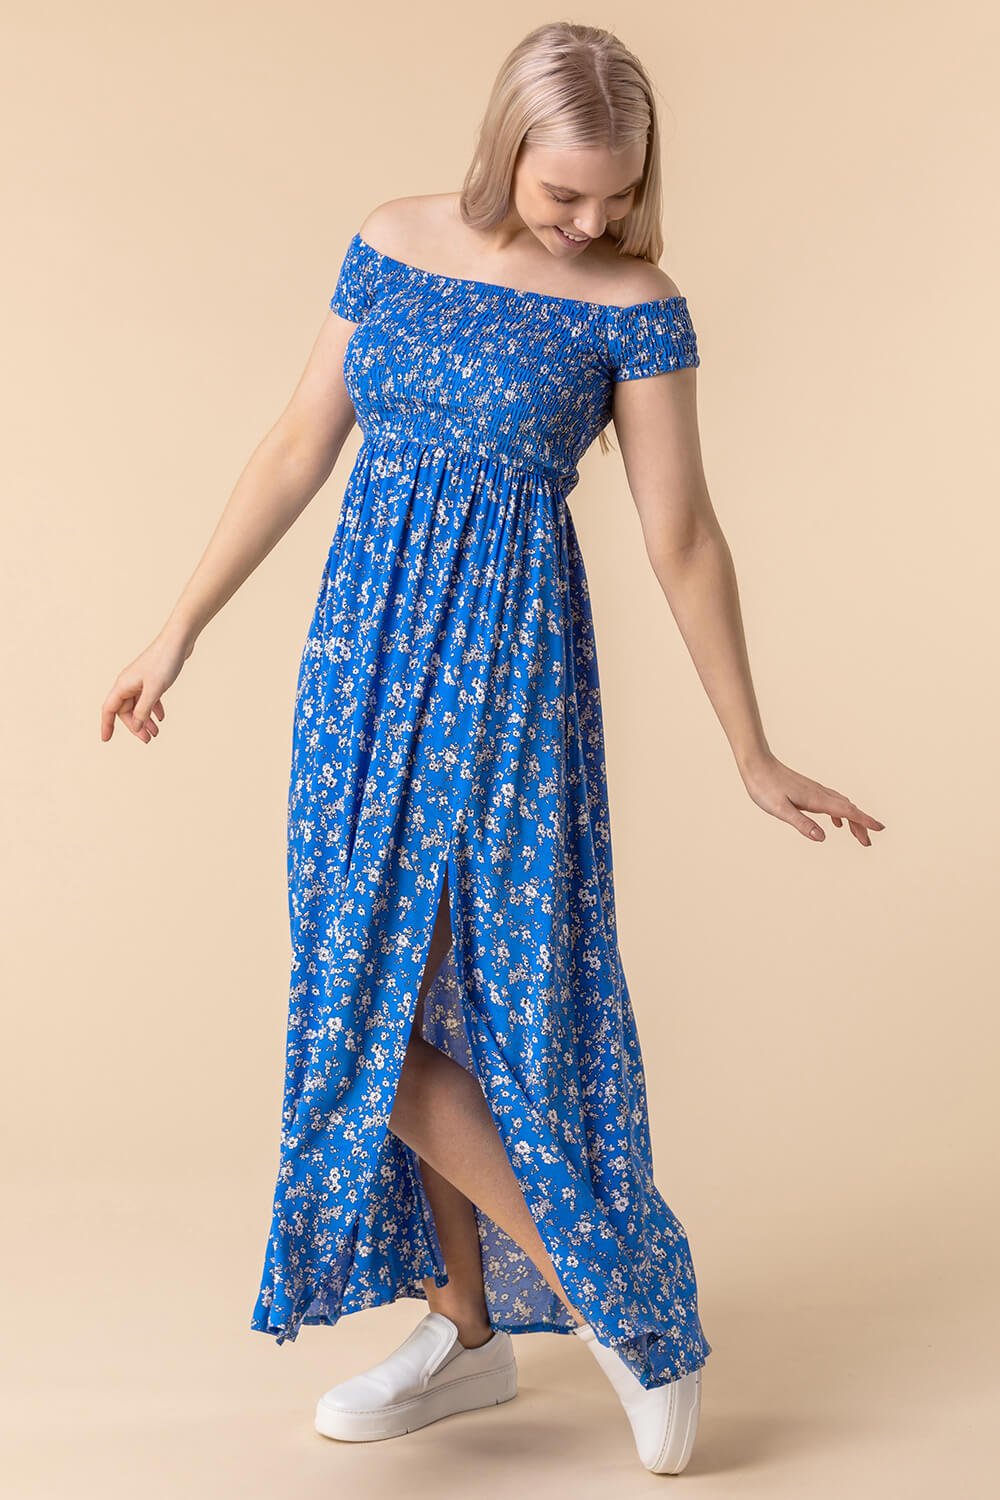 Blue Shirred Ditsy Floral Print Bardot Dress, Image 2 of 5